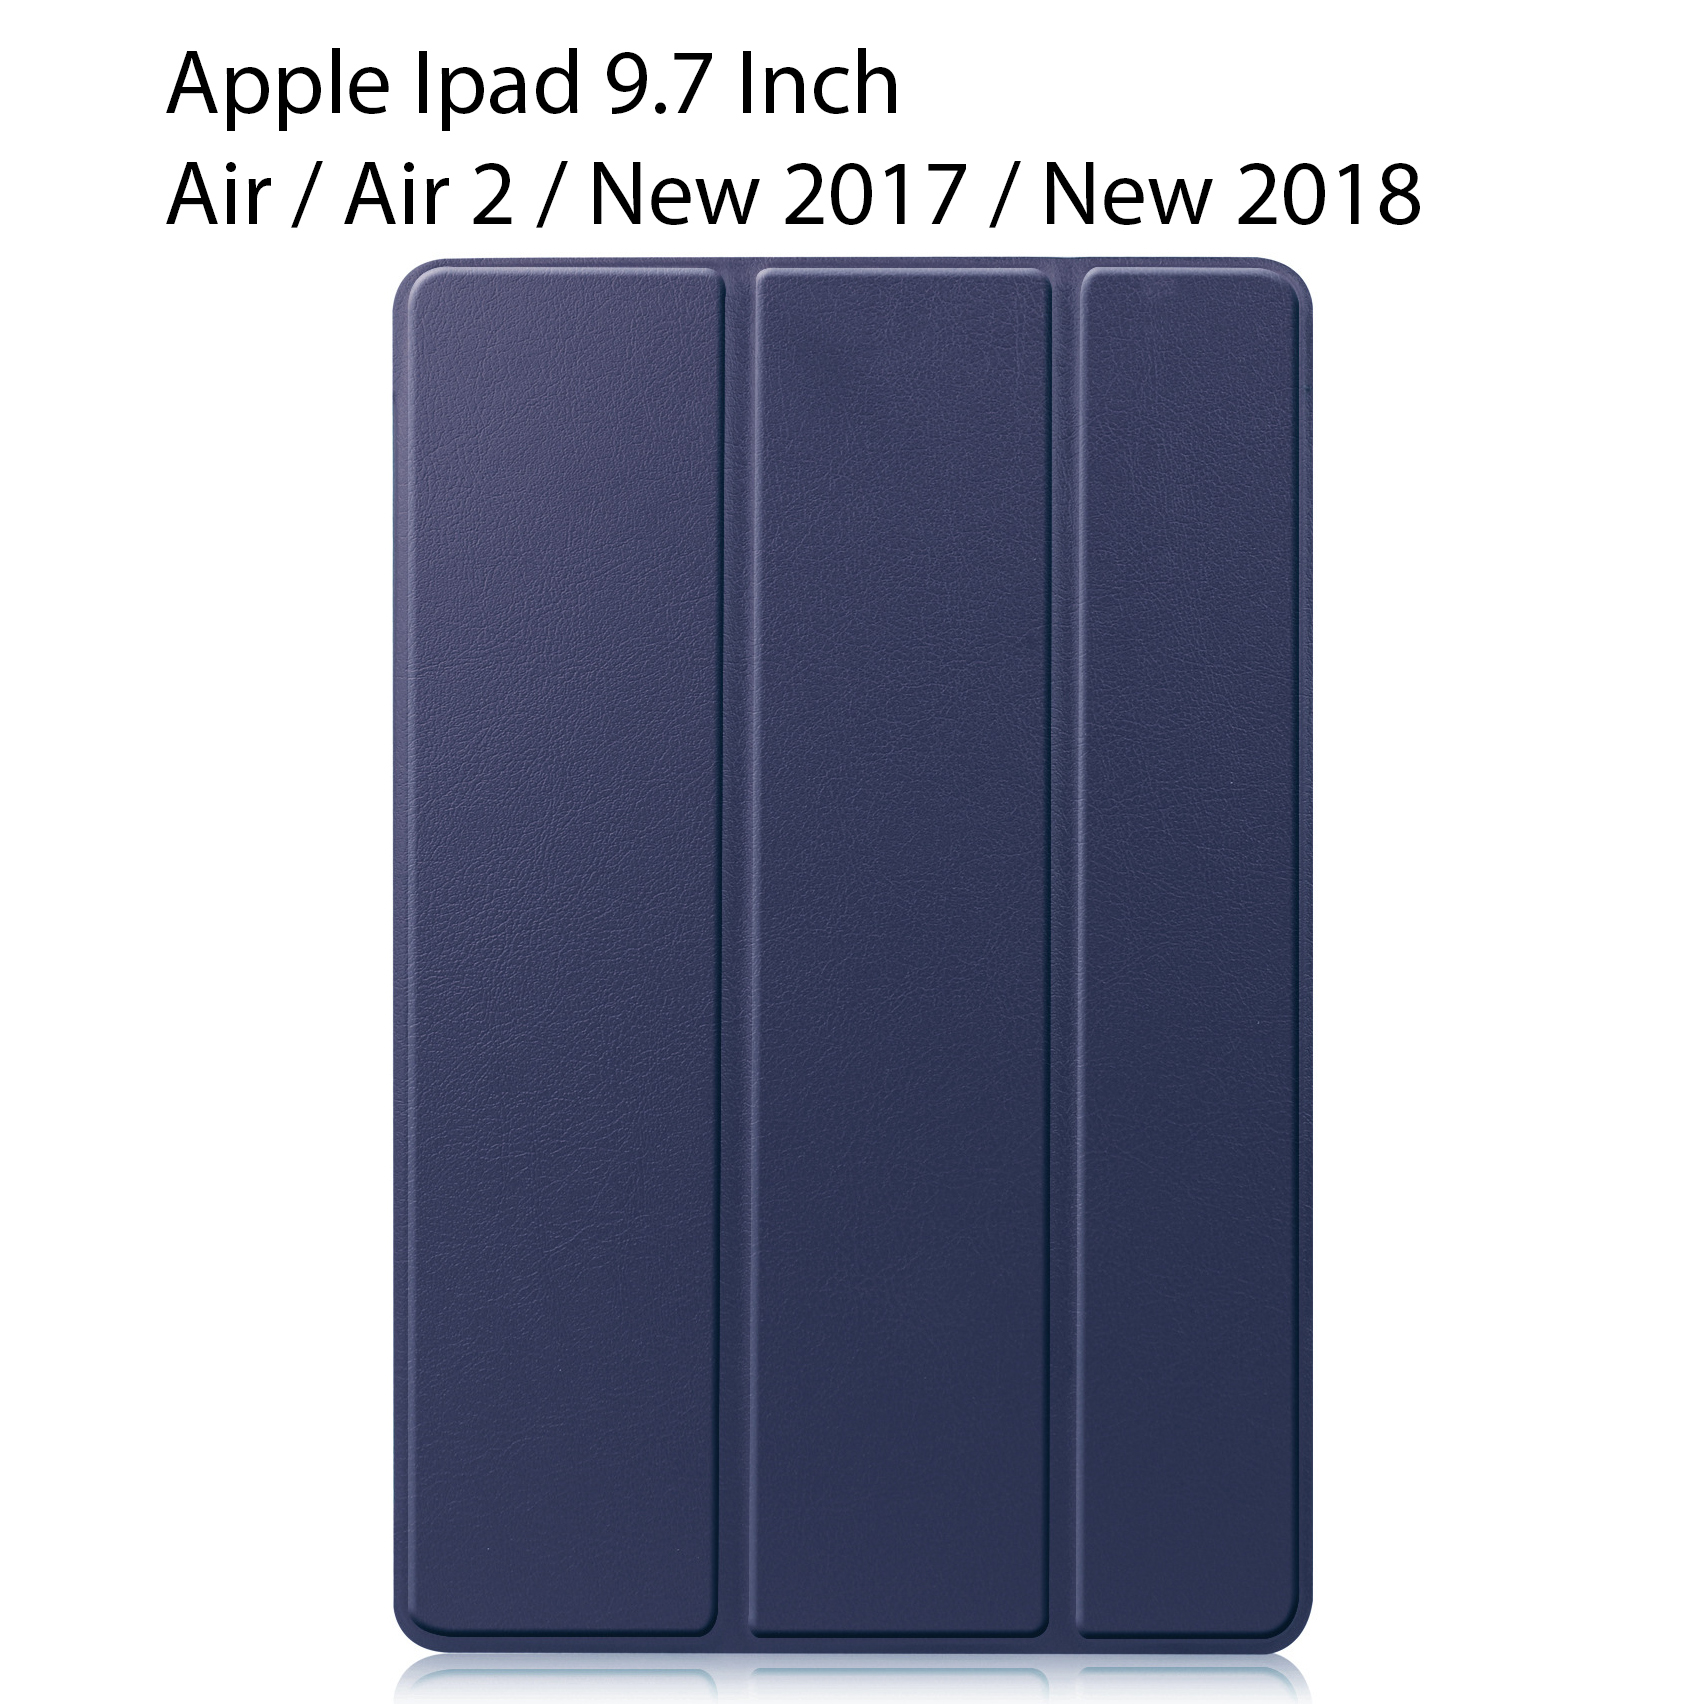 Bao Da Cover Cho Apple Ipad Air / Air 2 / Pro 9.7 / New 2017 / New 2018 Hỗ Trợ Smart cover